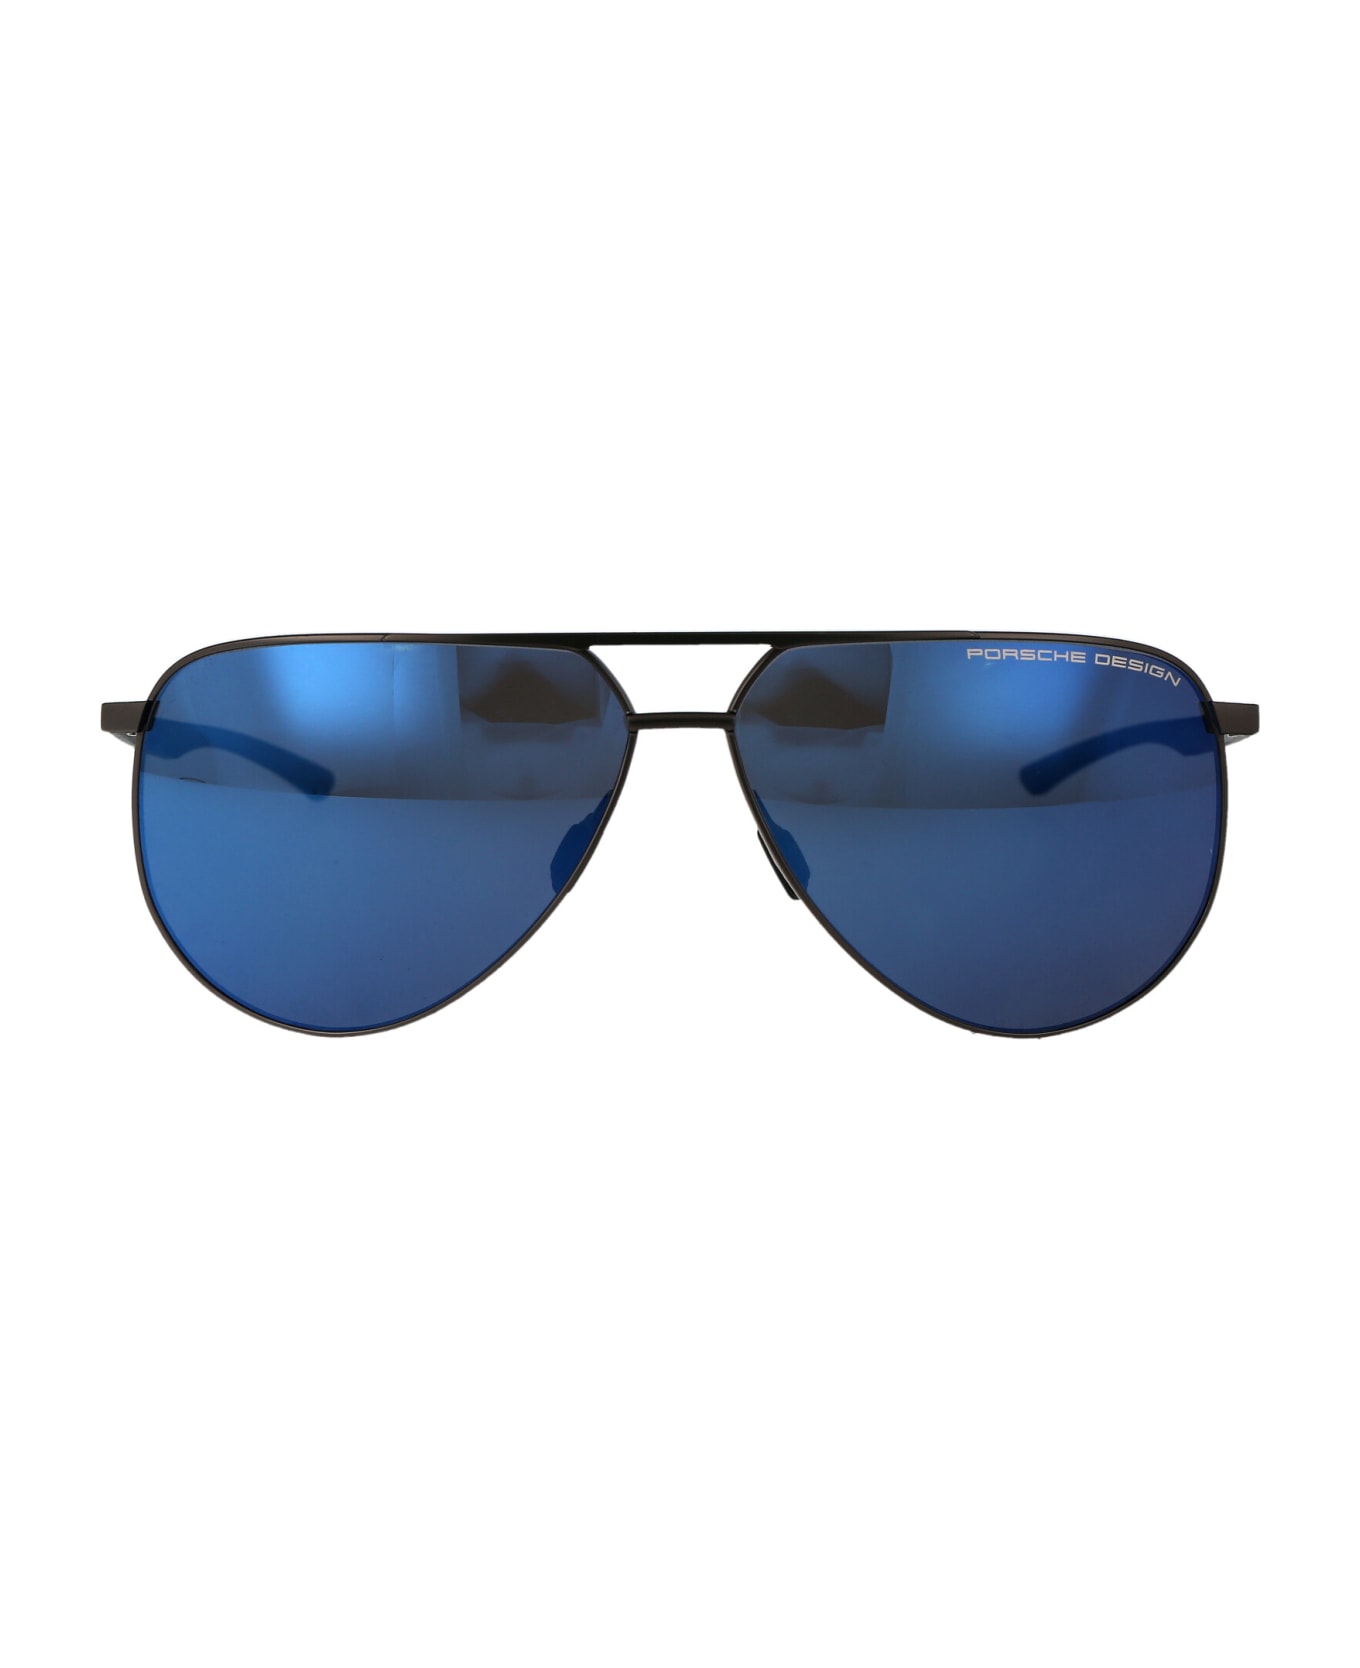 Porsche Design P8962 Sunglasses - C775 DARK GREY BLUE